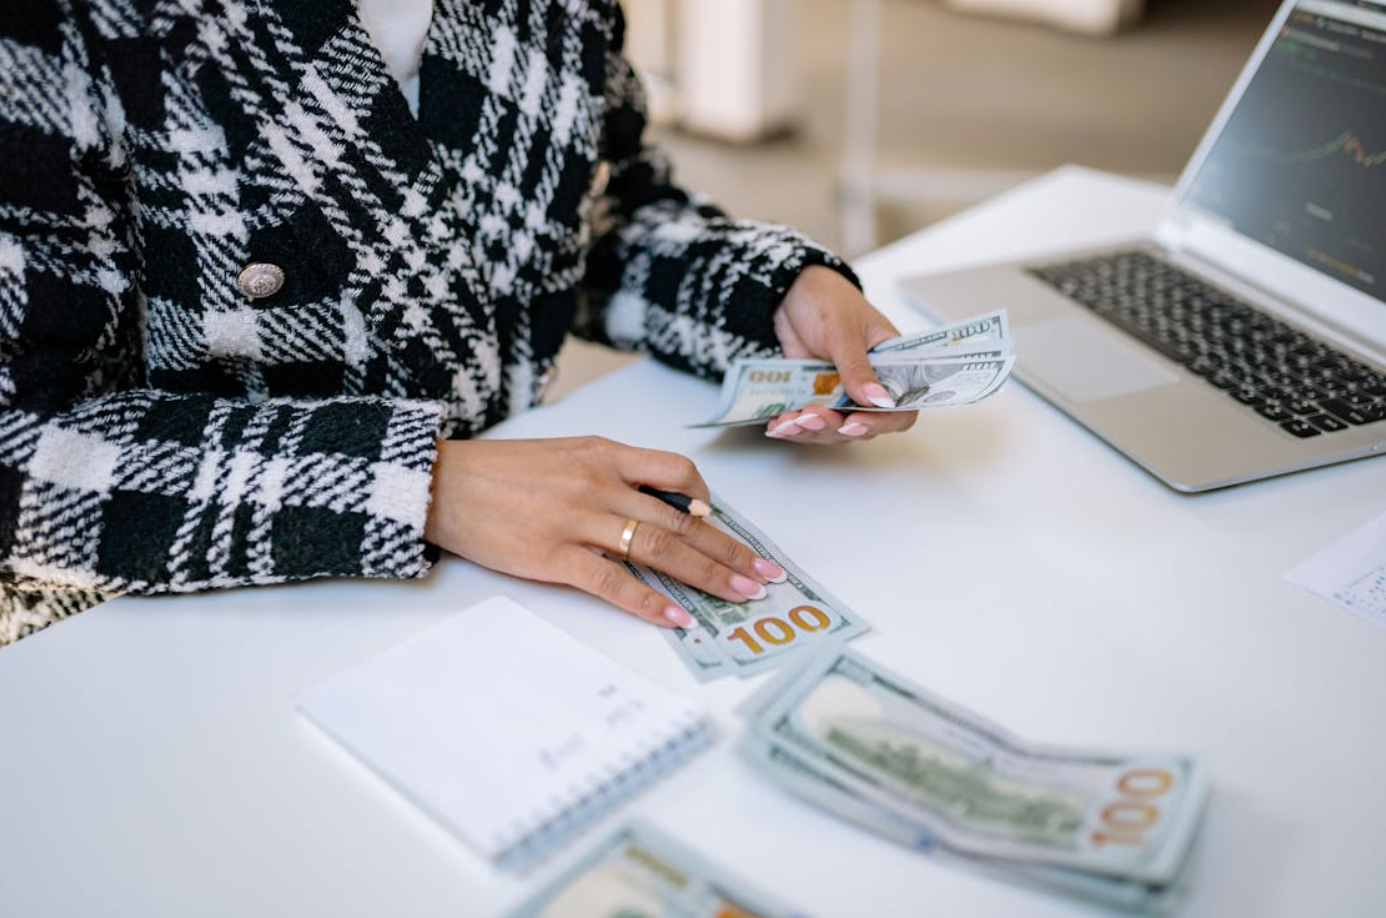 Woman counting money at desk; image by Yan Krukau, via Pexels.com.